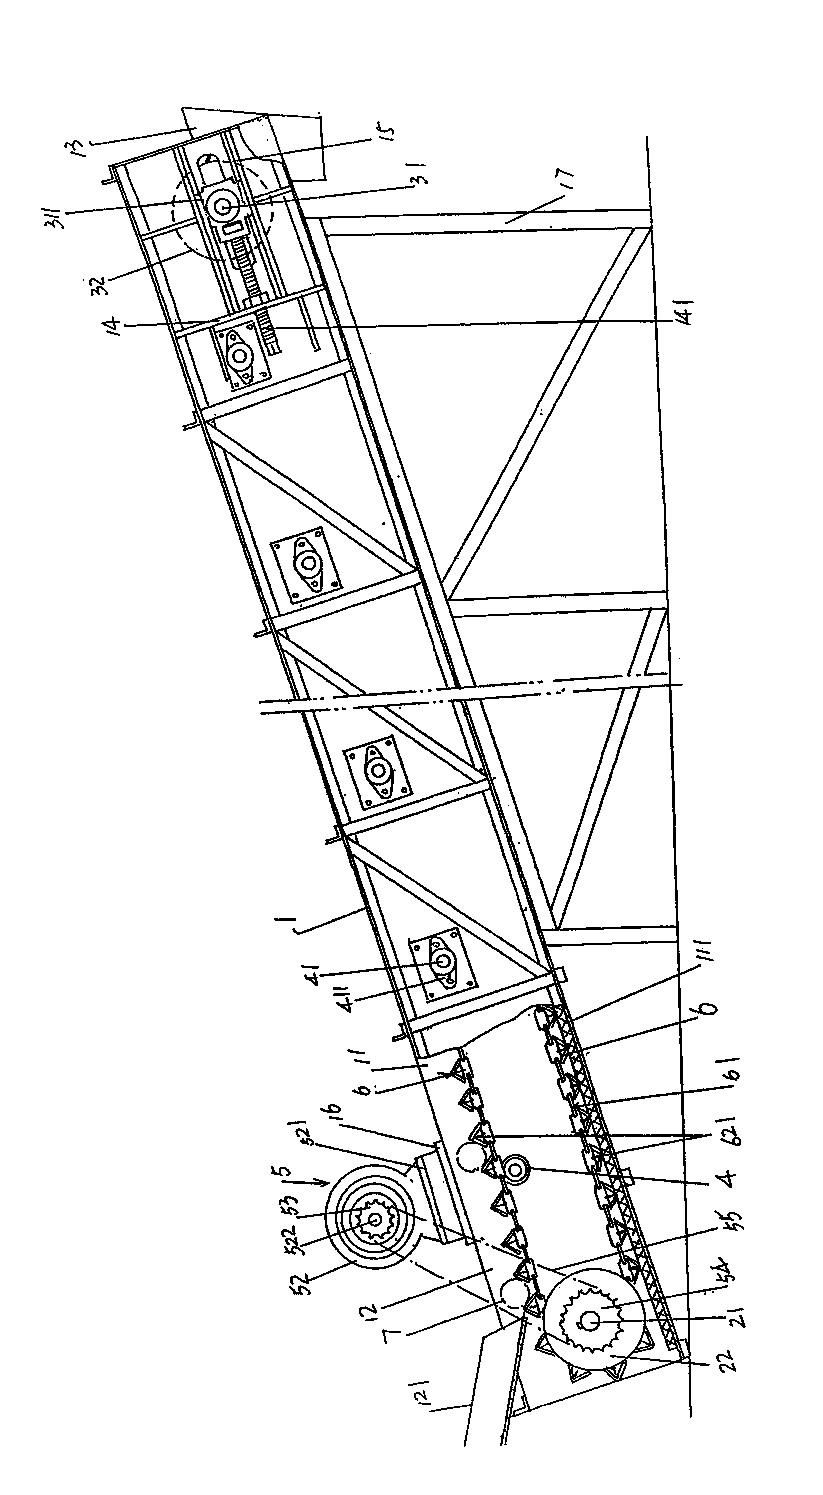 Steel ball conveyor device